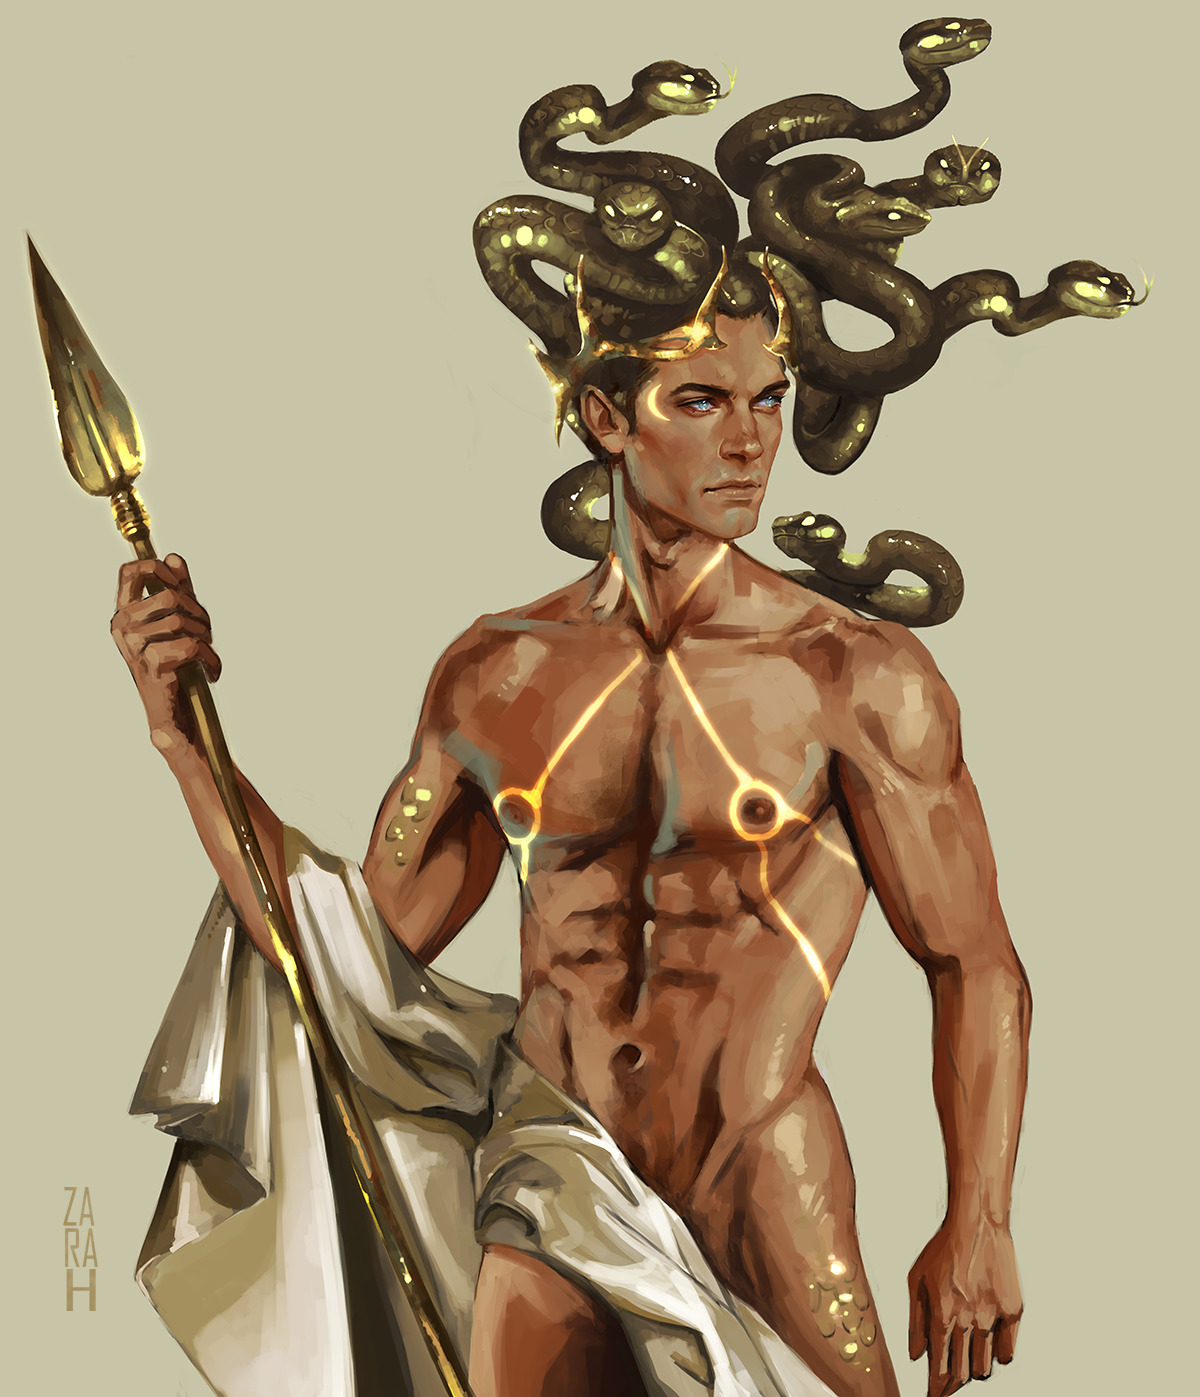 za-ra-h:
“Greek mythology reimagined; Perseus as Medusa. Finally got around to finishing this!
”